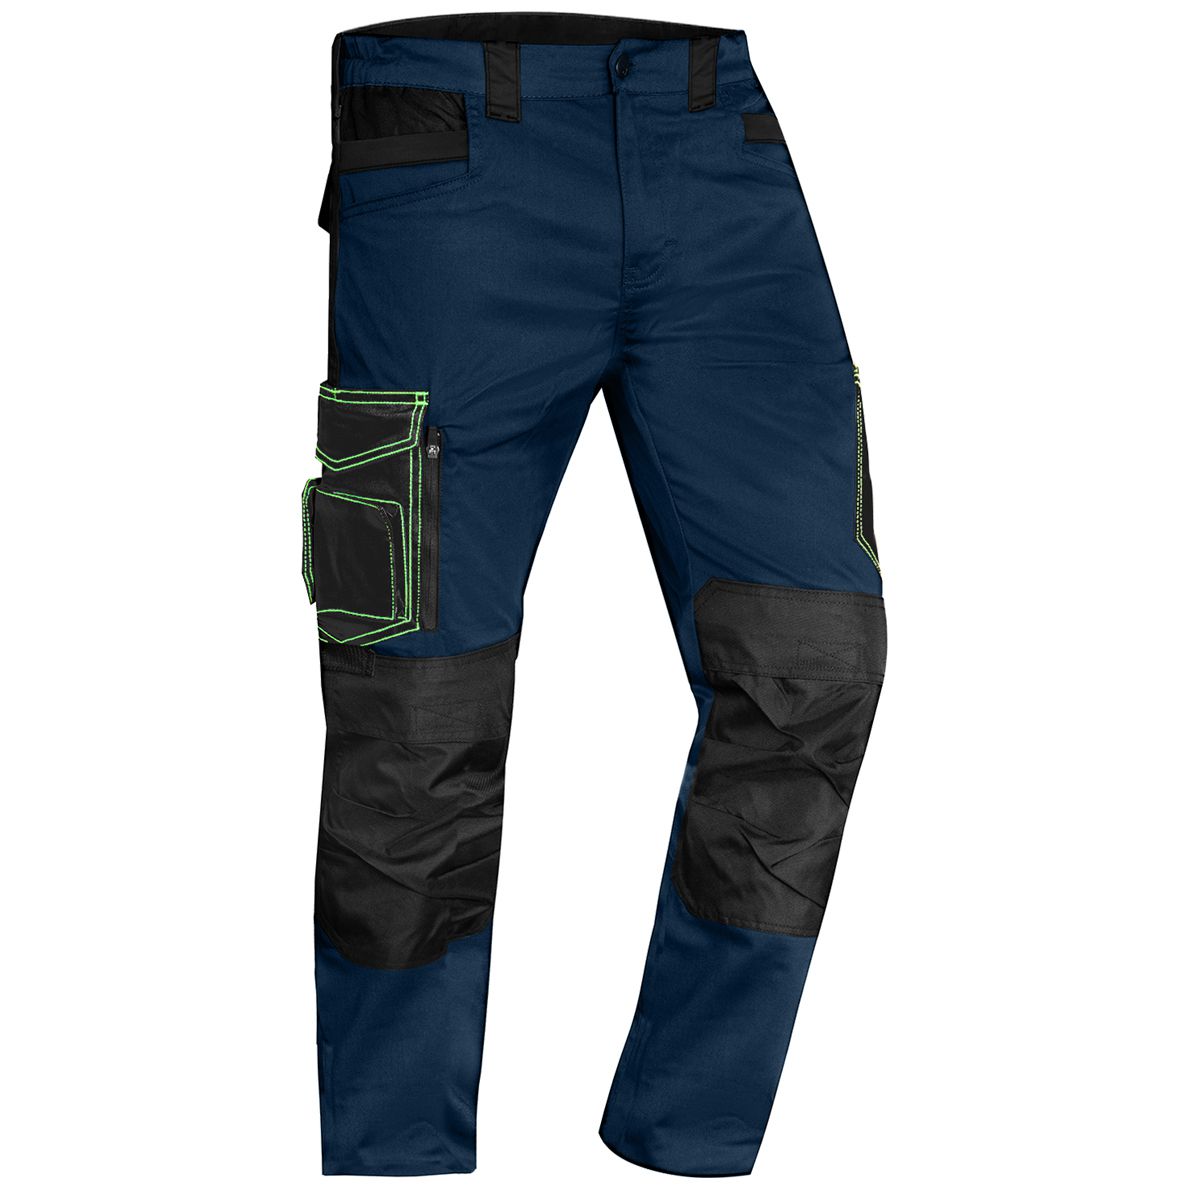 ACE Genesis Men's Work Trousers Long - Men's Cargo Trousers for Work - Stretch Waistband & Knee Pockets - Dark Blue - 60